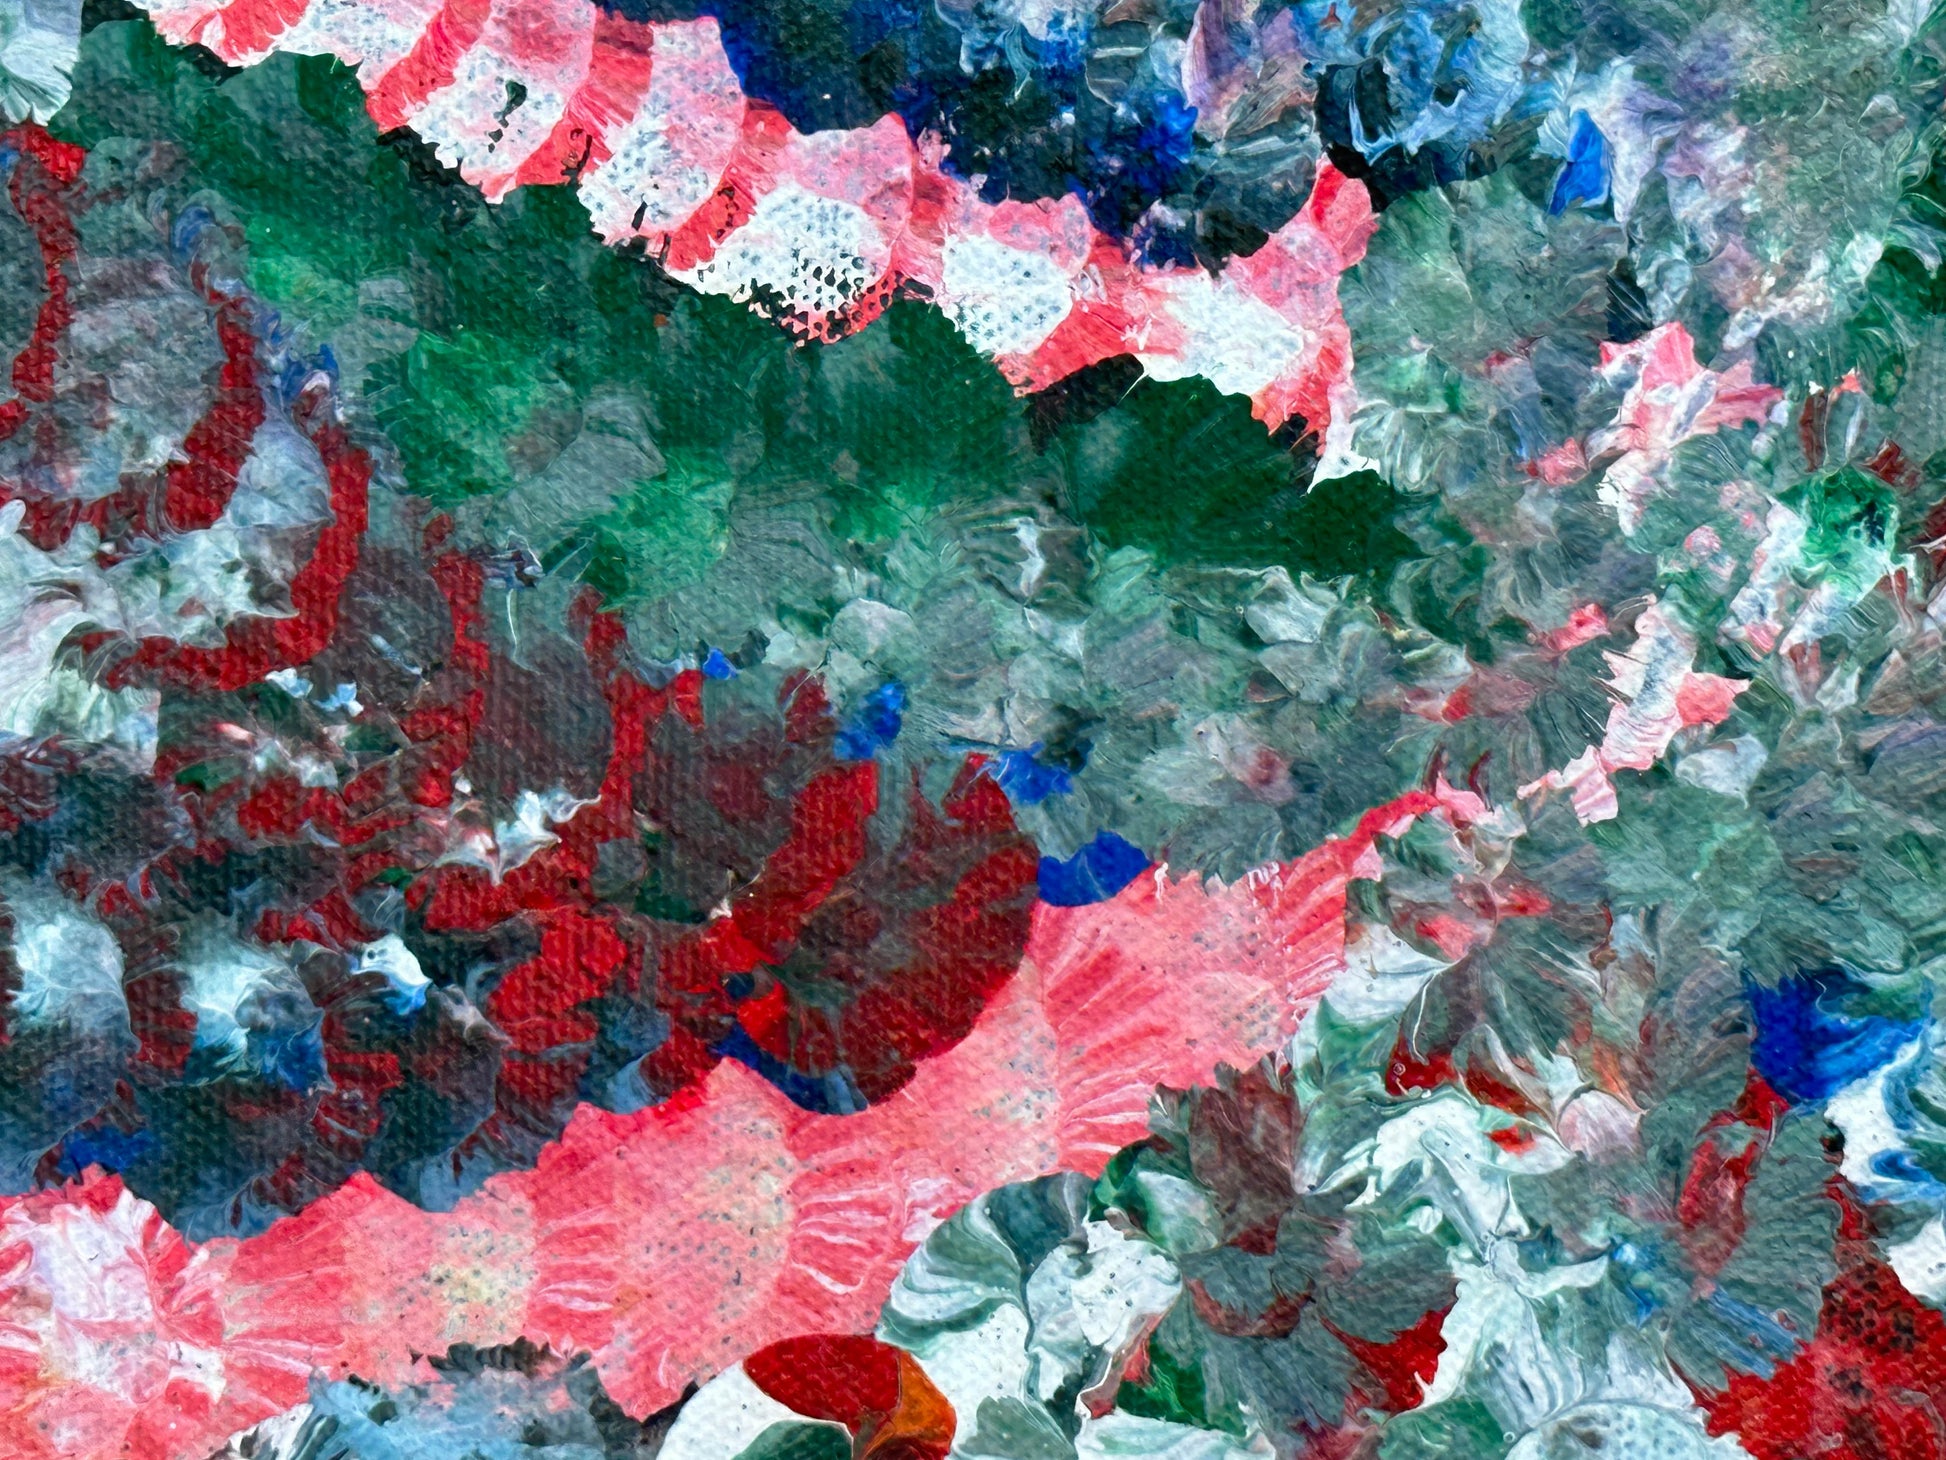 Dolly Mills Petyarre + Utopia + Bush Yam Flowers + Yam Flowers + Contemporary Art + Traditional Art + Darwin Based Galllery + Indigenous Art + Traditional Art + Australian Art + Red + Blue + Green + Pink + White